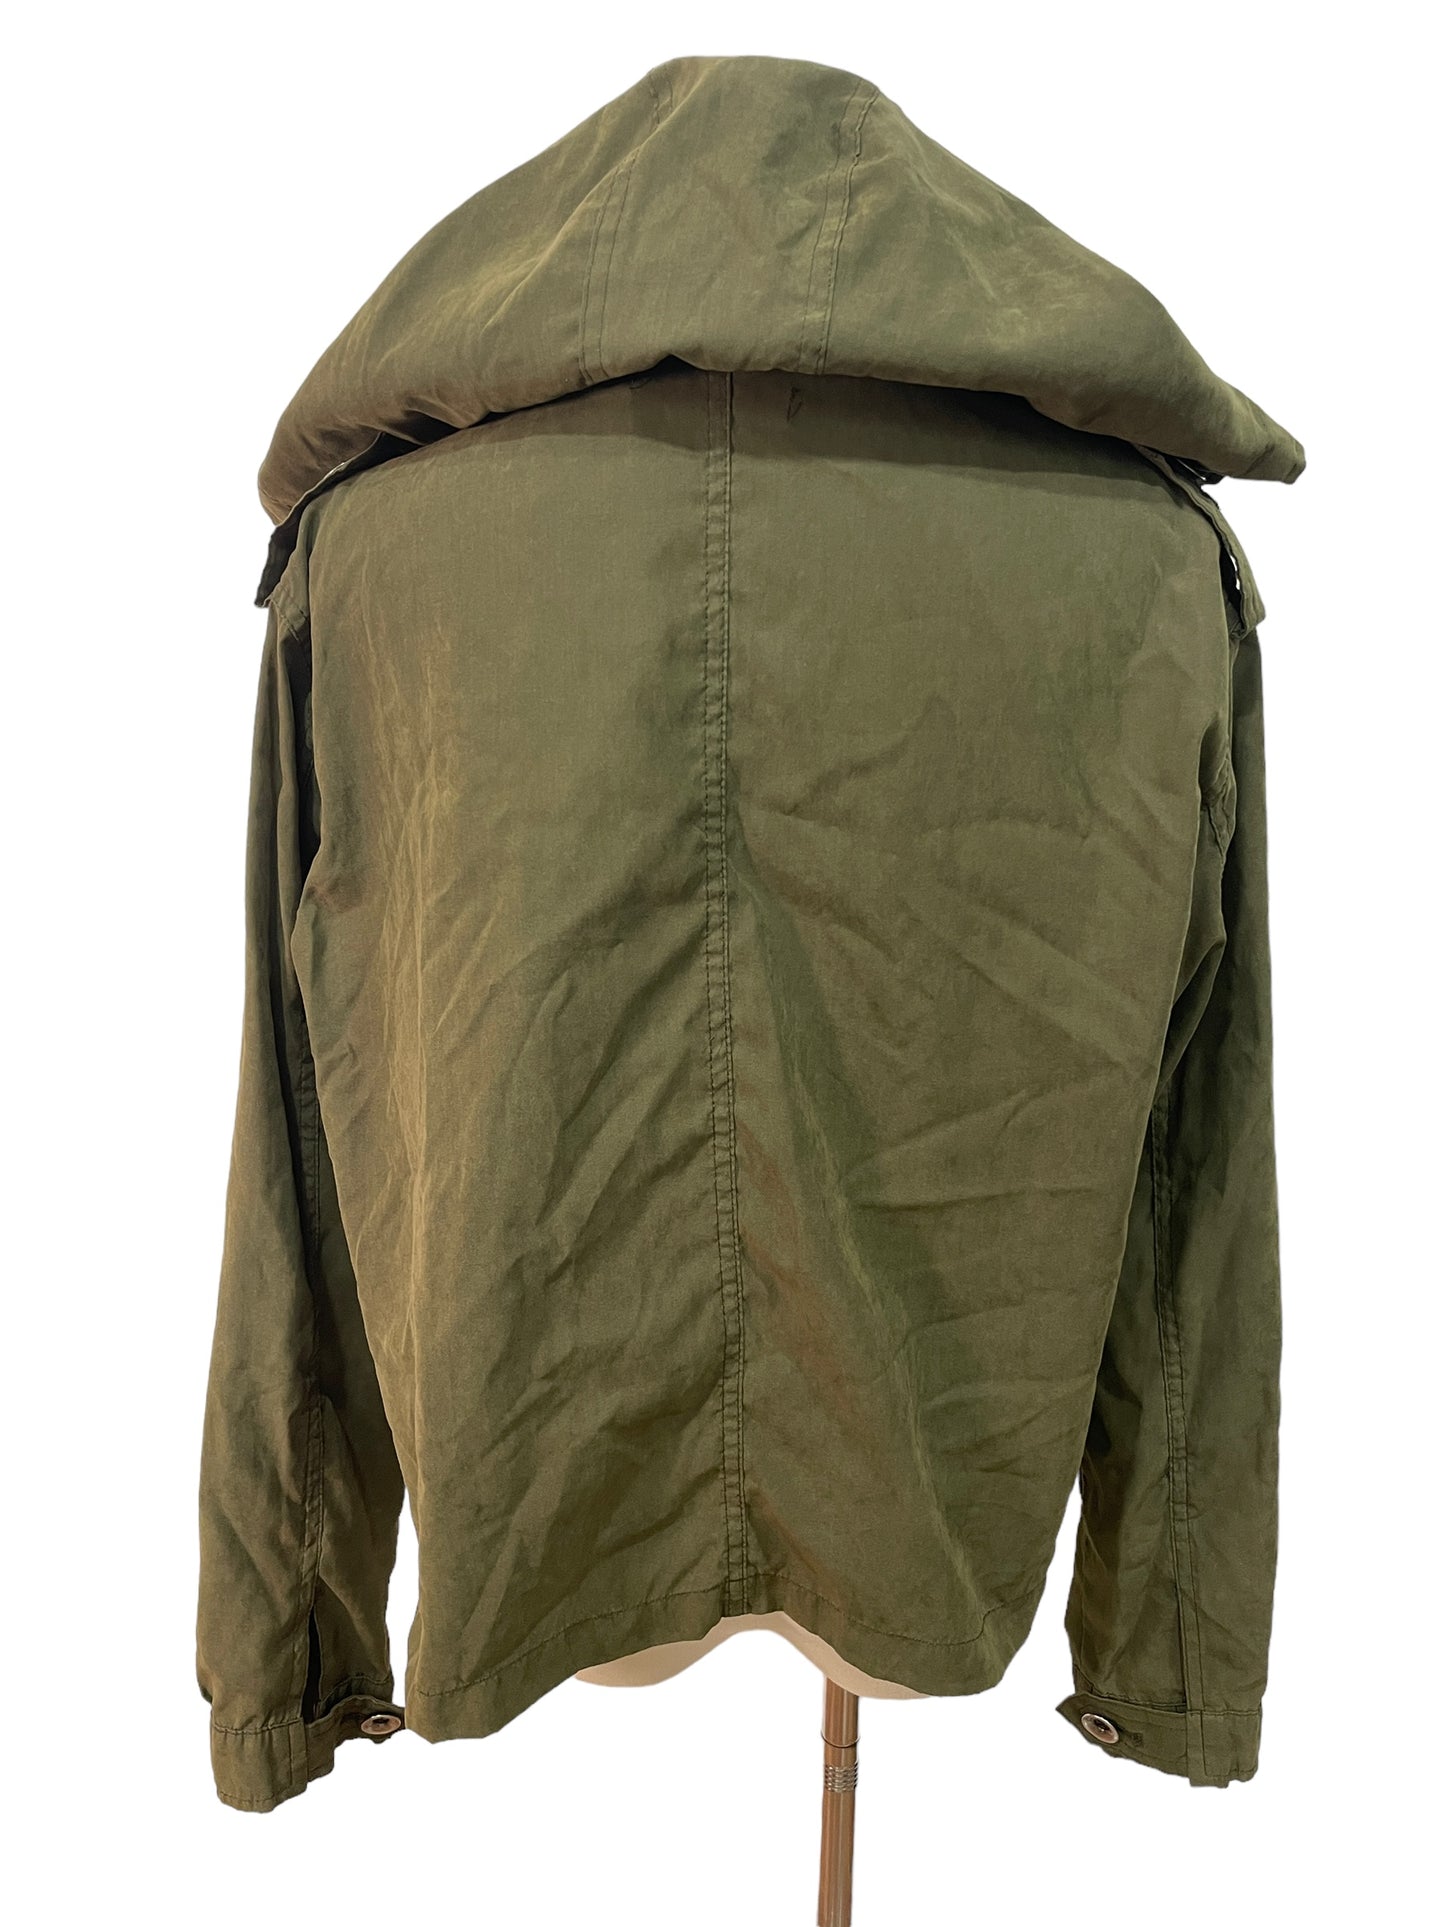 Brandy Melville Utility Jacket w/Hoodie - OS